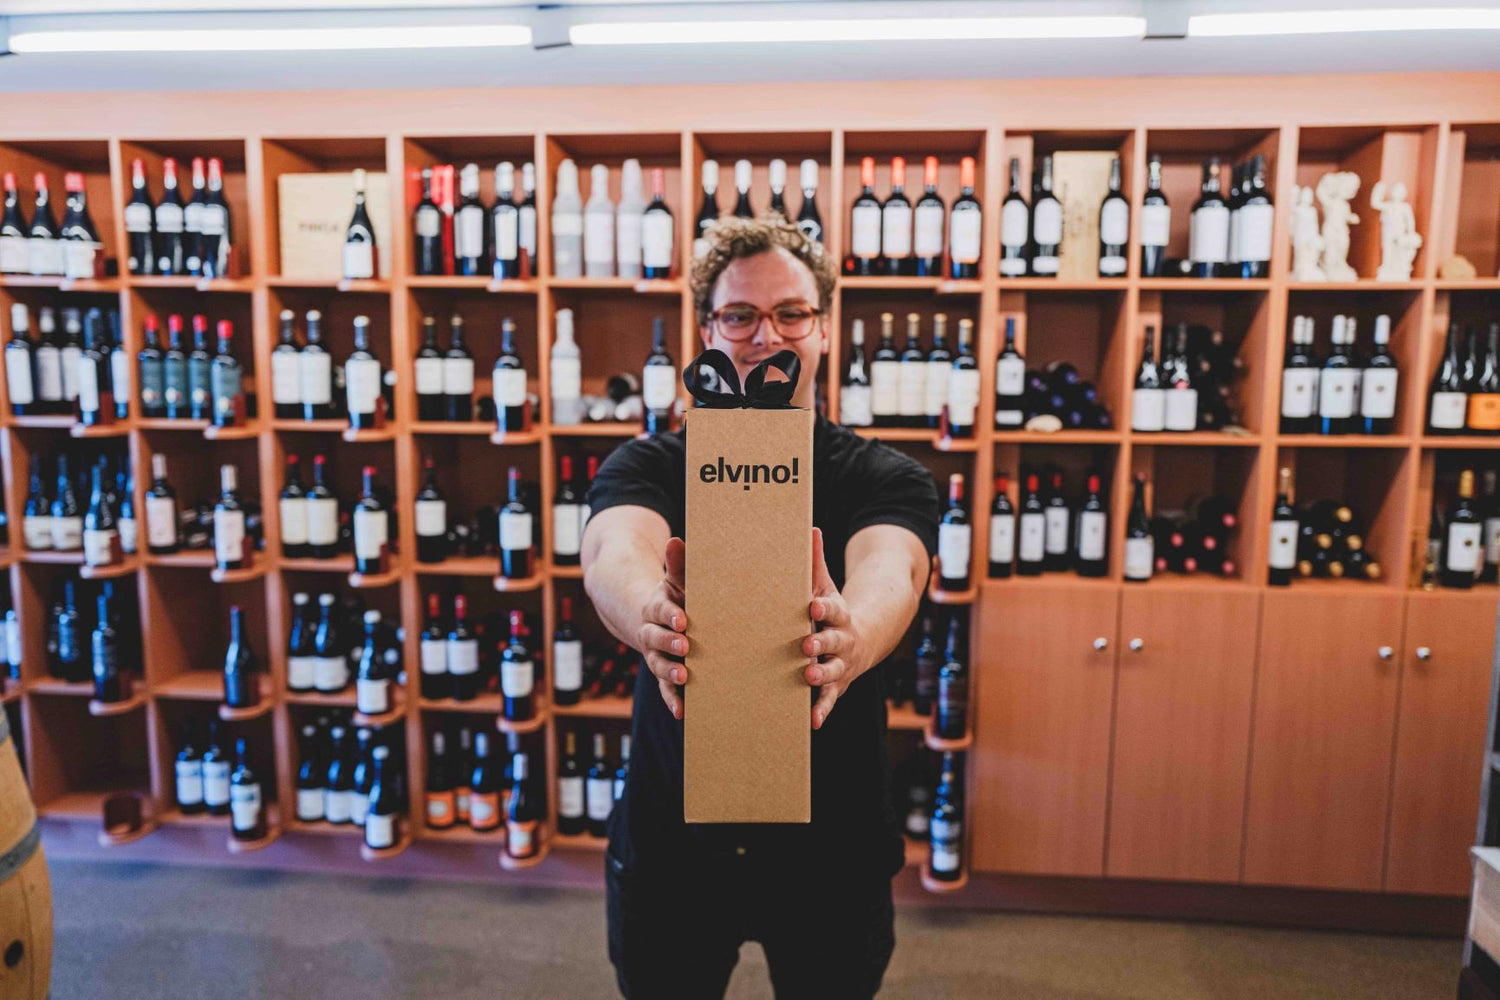 Tom displays a Wine package with Elvino branding